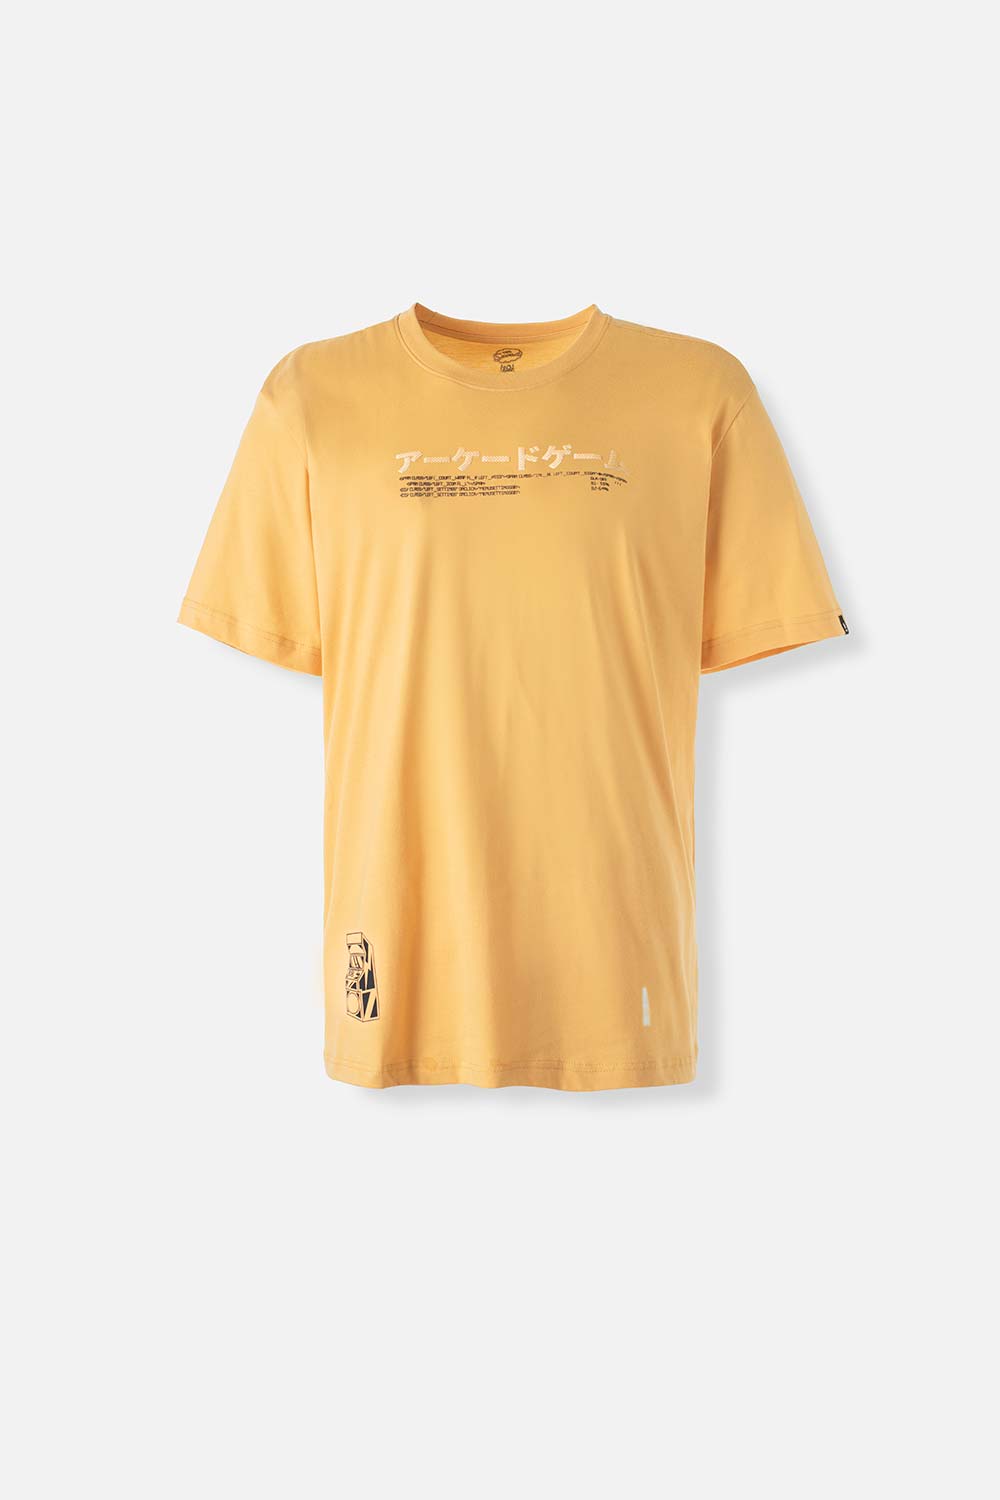 Camiseta Movies amarillo trigo de cuello redondo género neutro XS-0